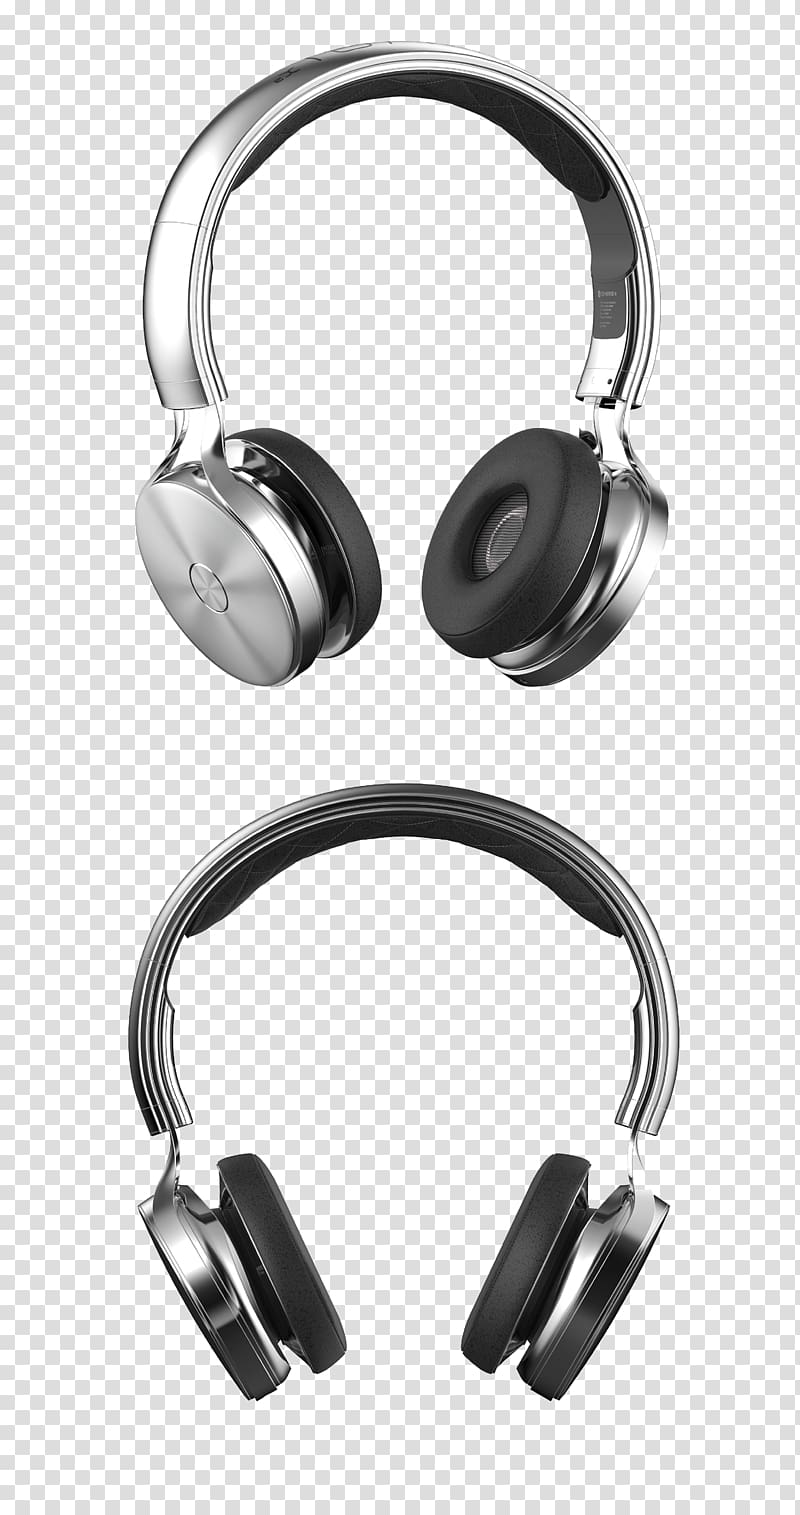 Headphones Loudspeaker Headset, LEVEL,x3 Headphones transparent background PNG clipart